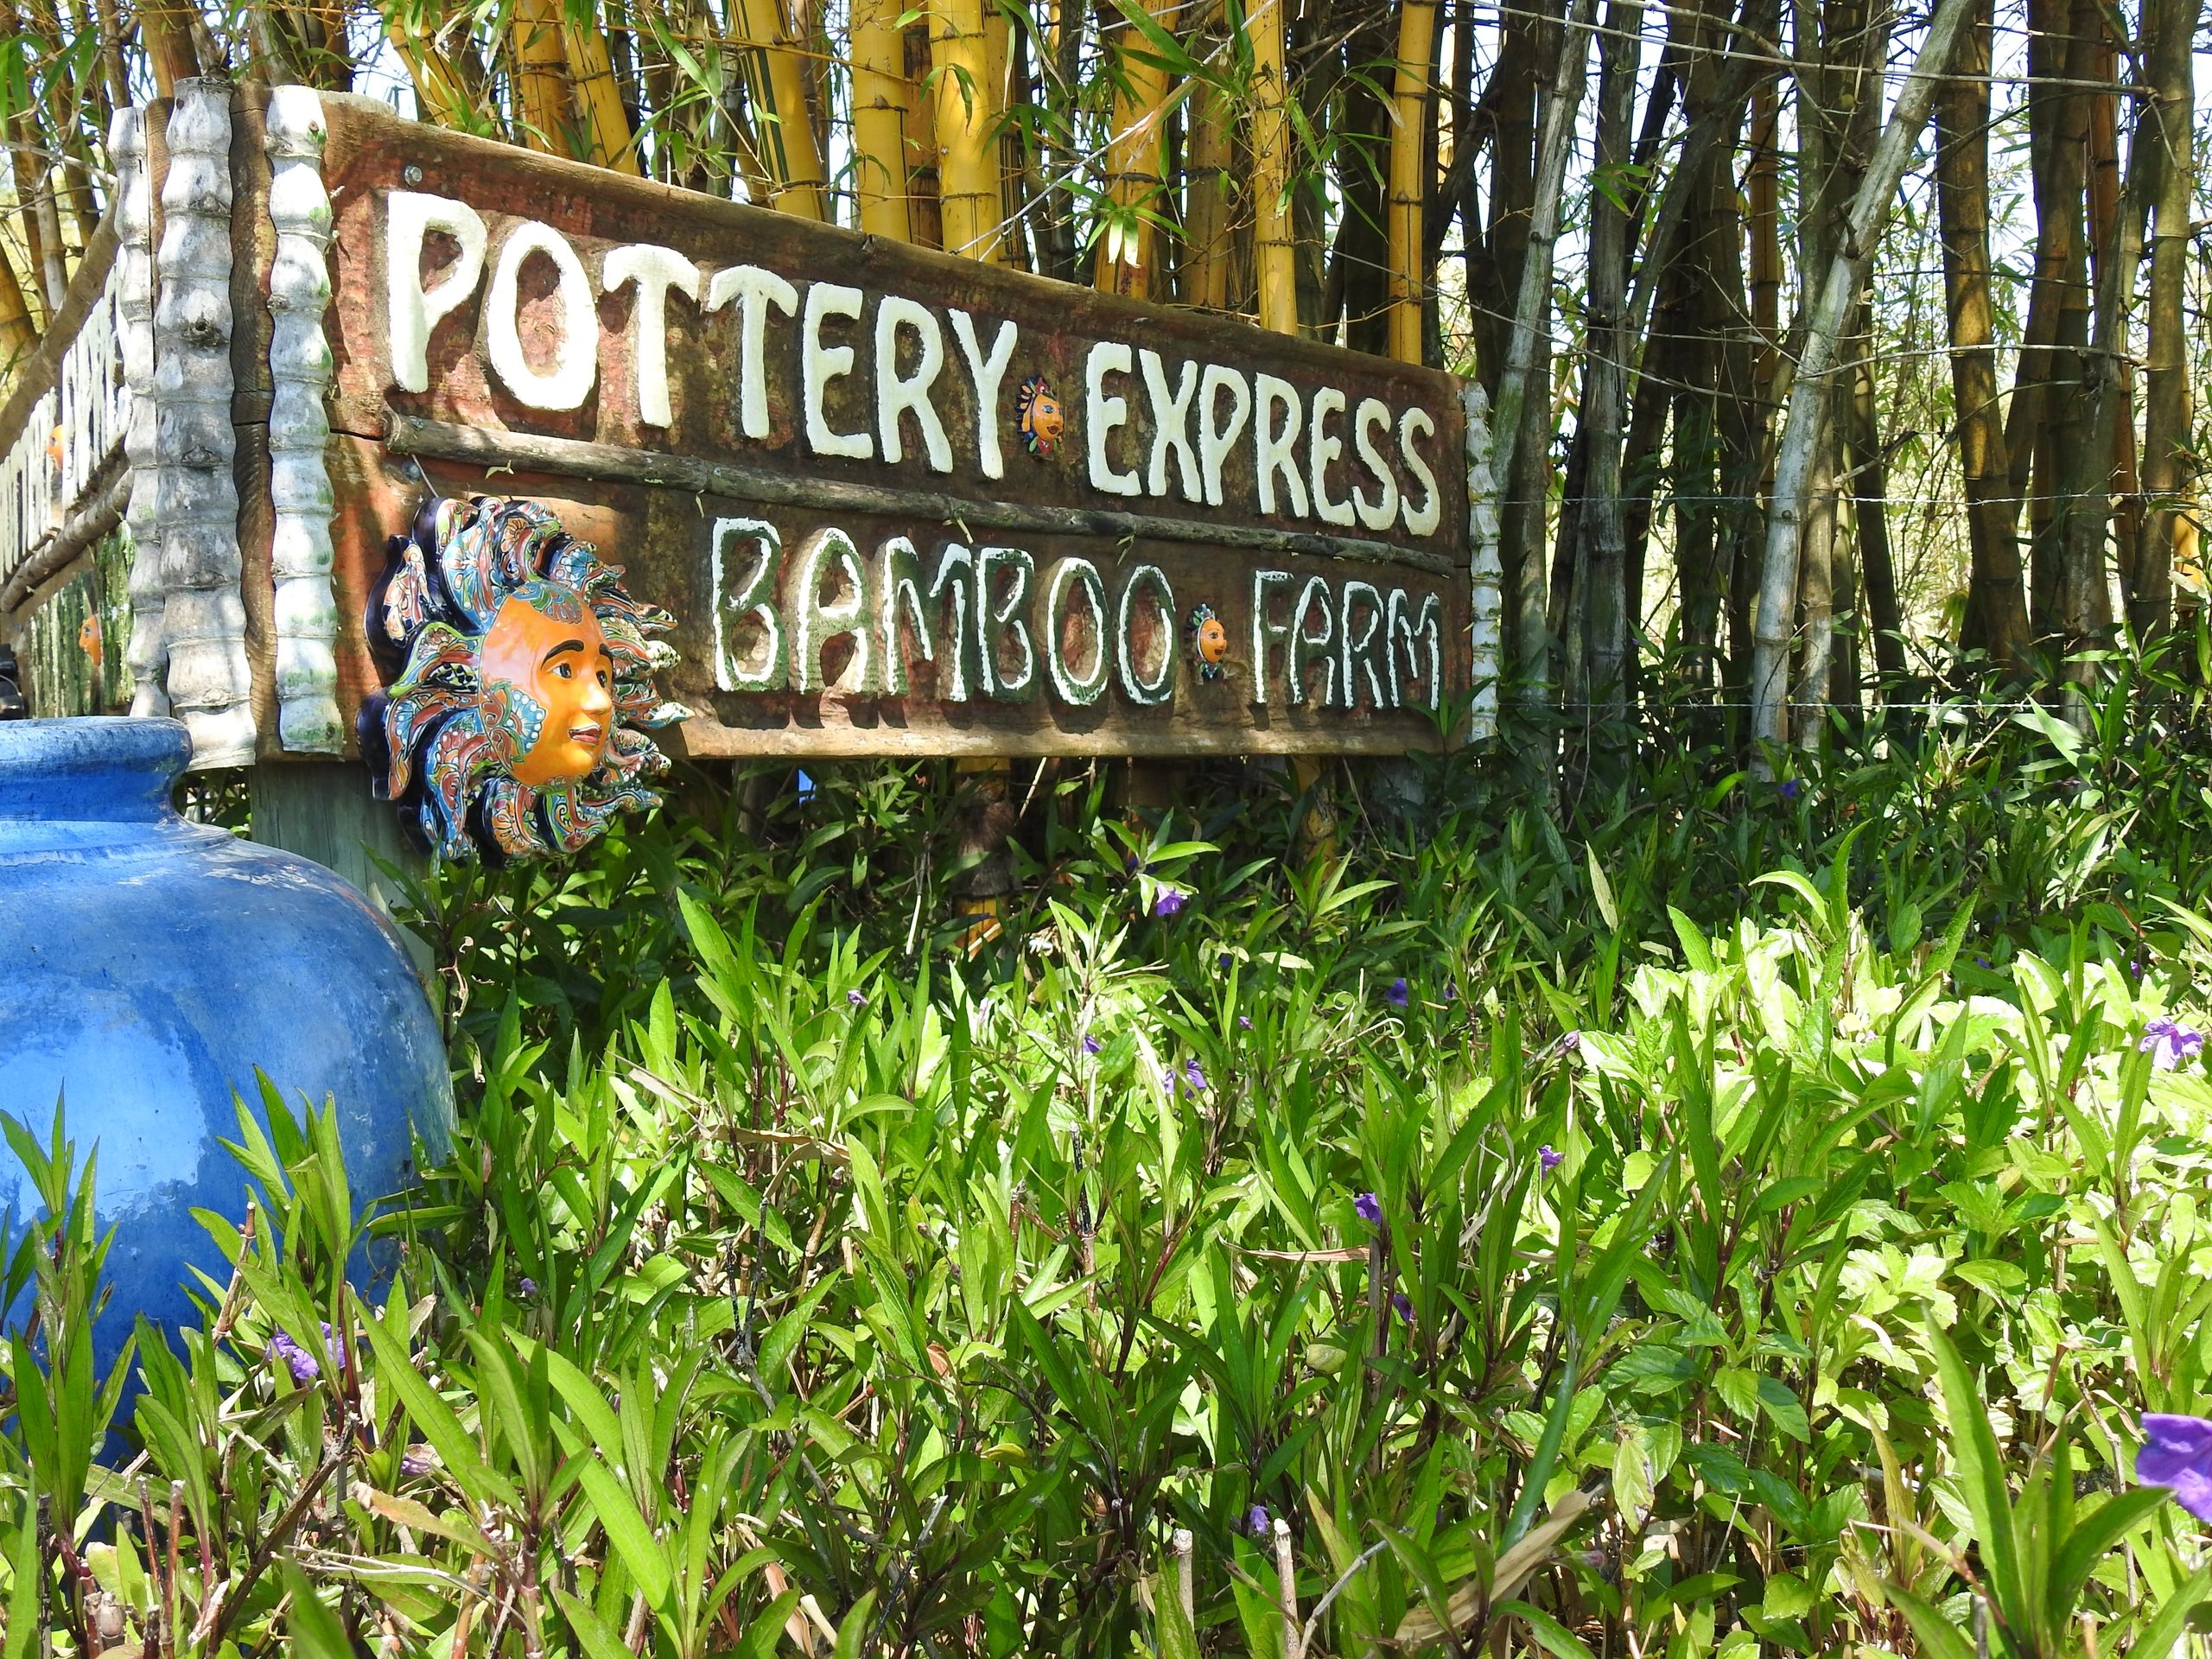 Pottery Express